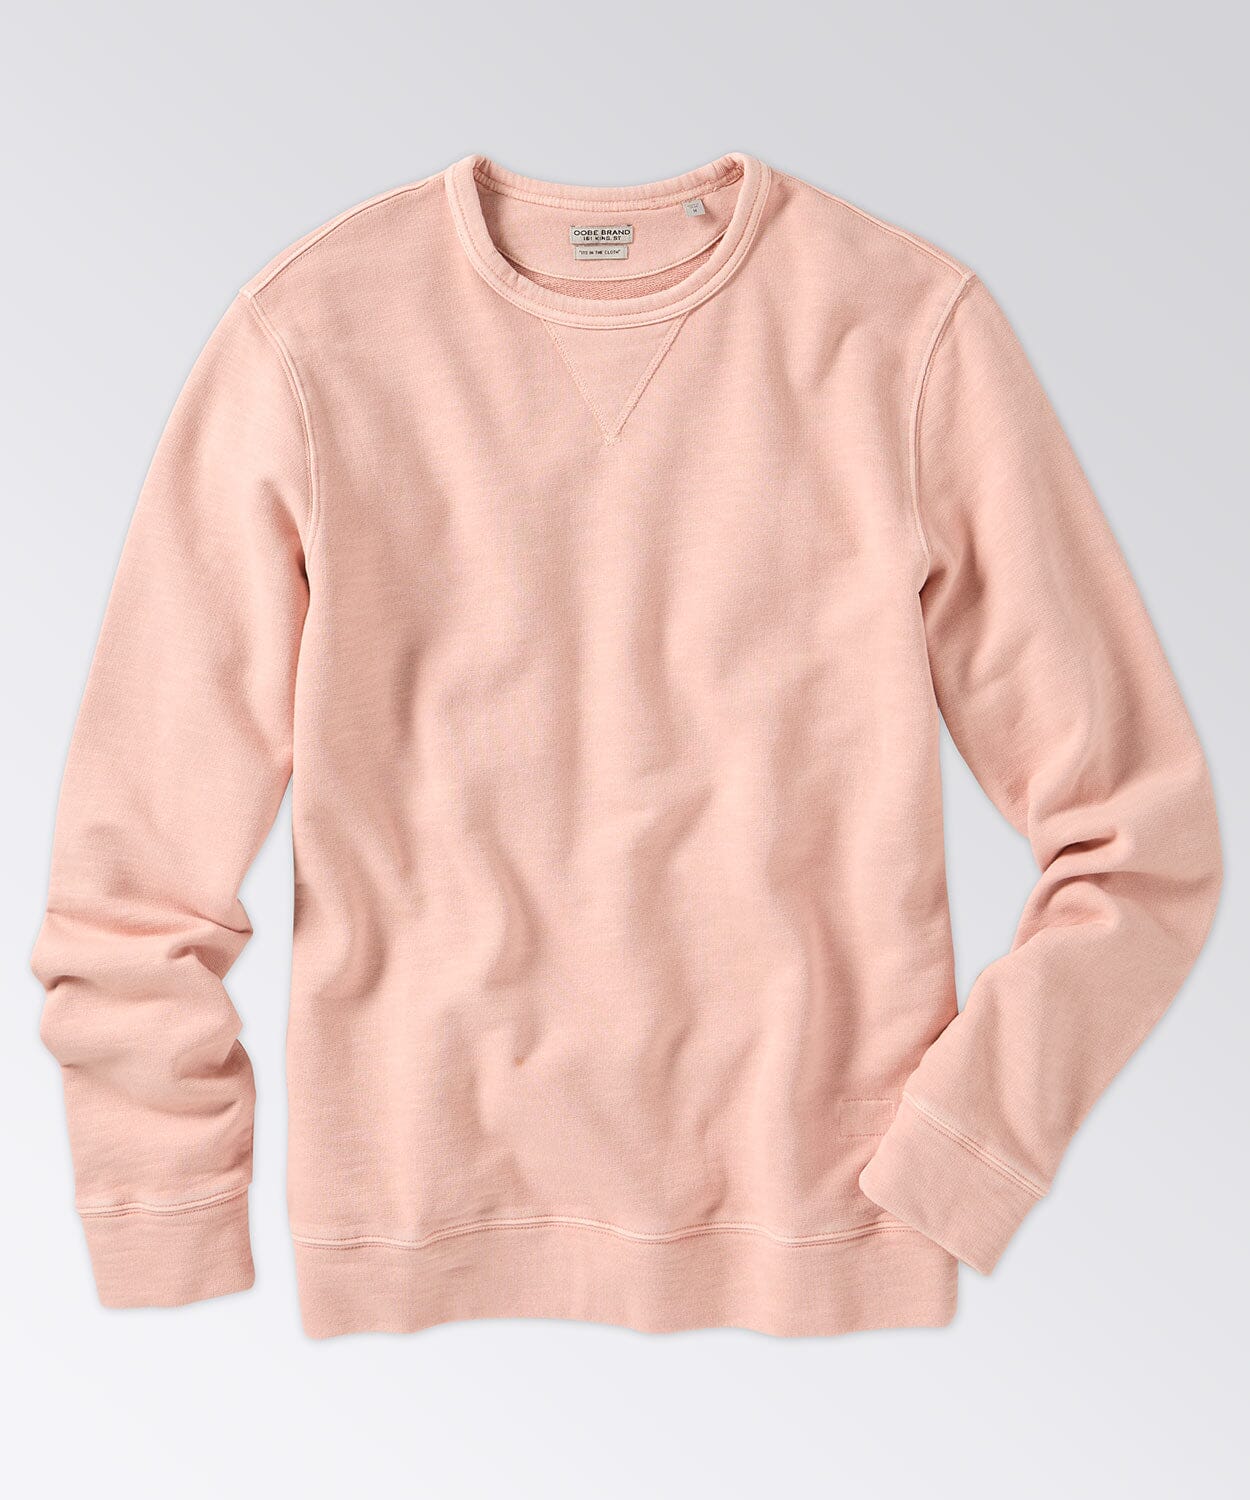 Crewneck BRAND OOBE | Hatteras Sweatshirt Pullover Mens